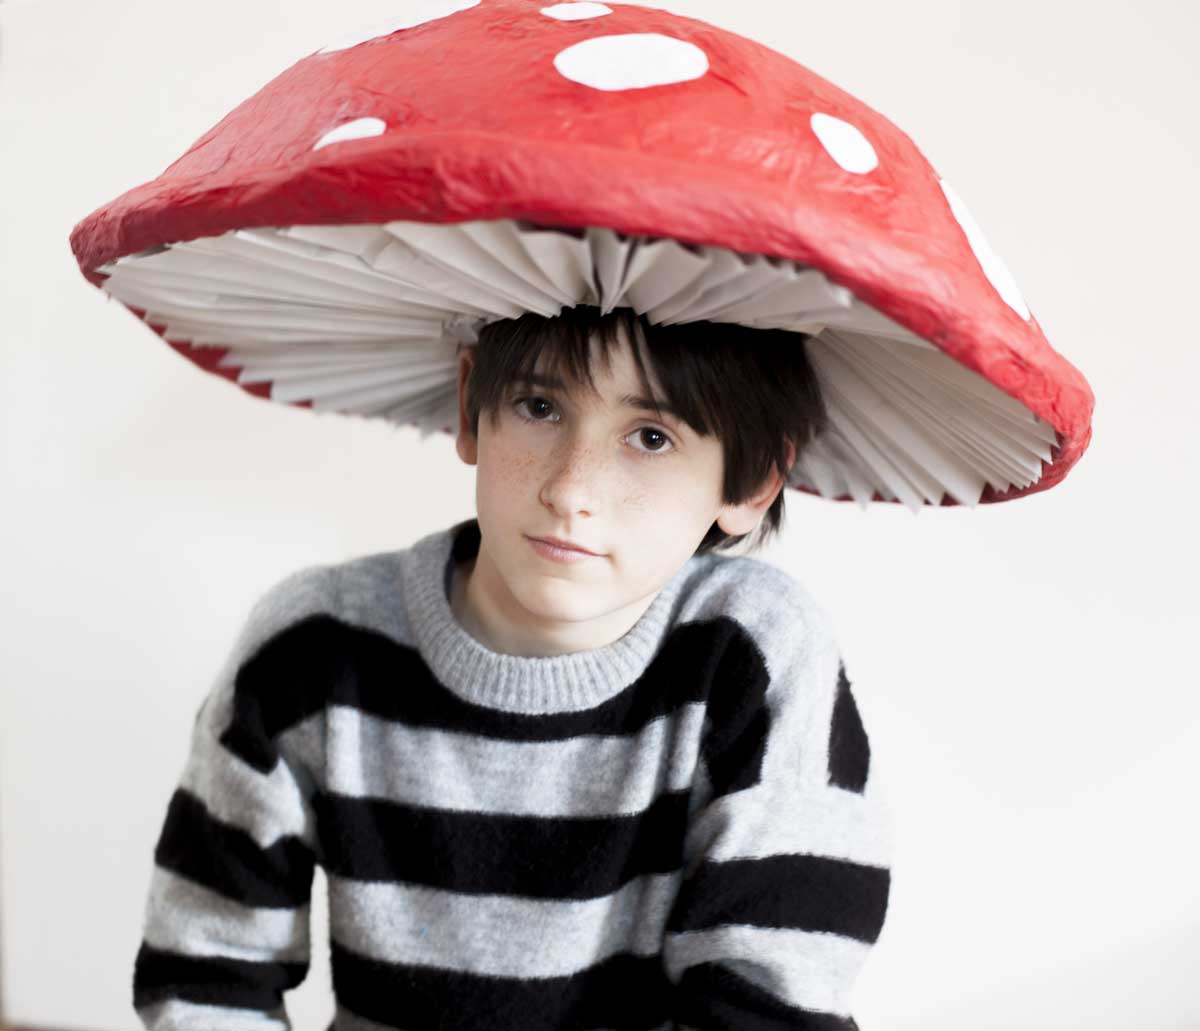 manualidad-pilz-verkleidung-disfraz-seta-mushroom-costume-selfmade-diy